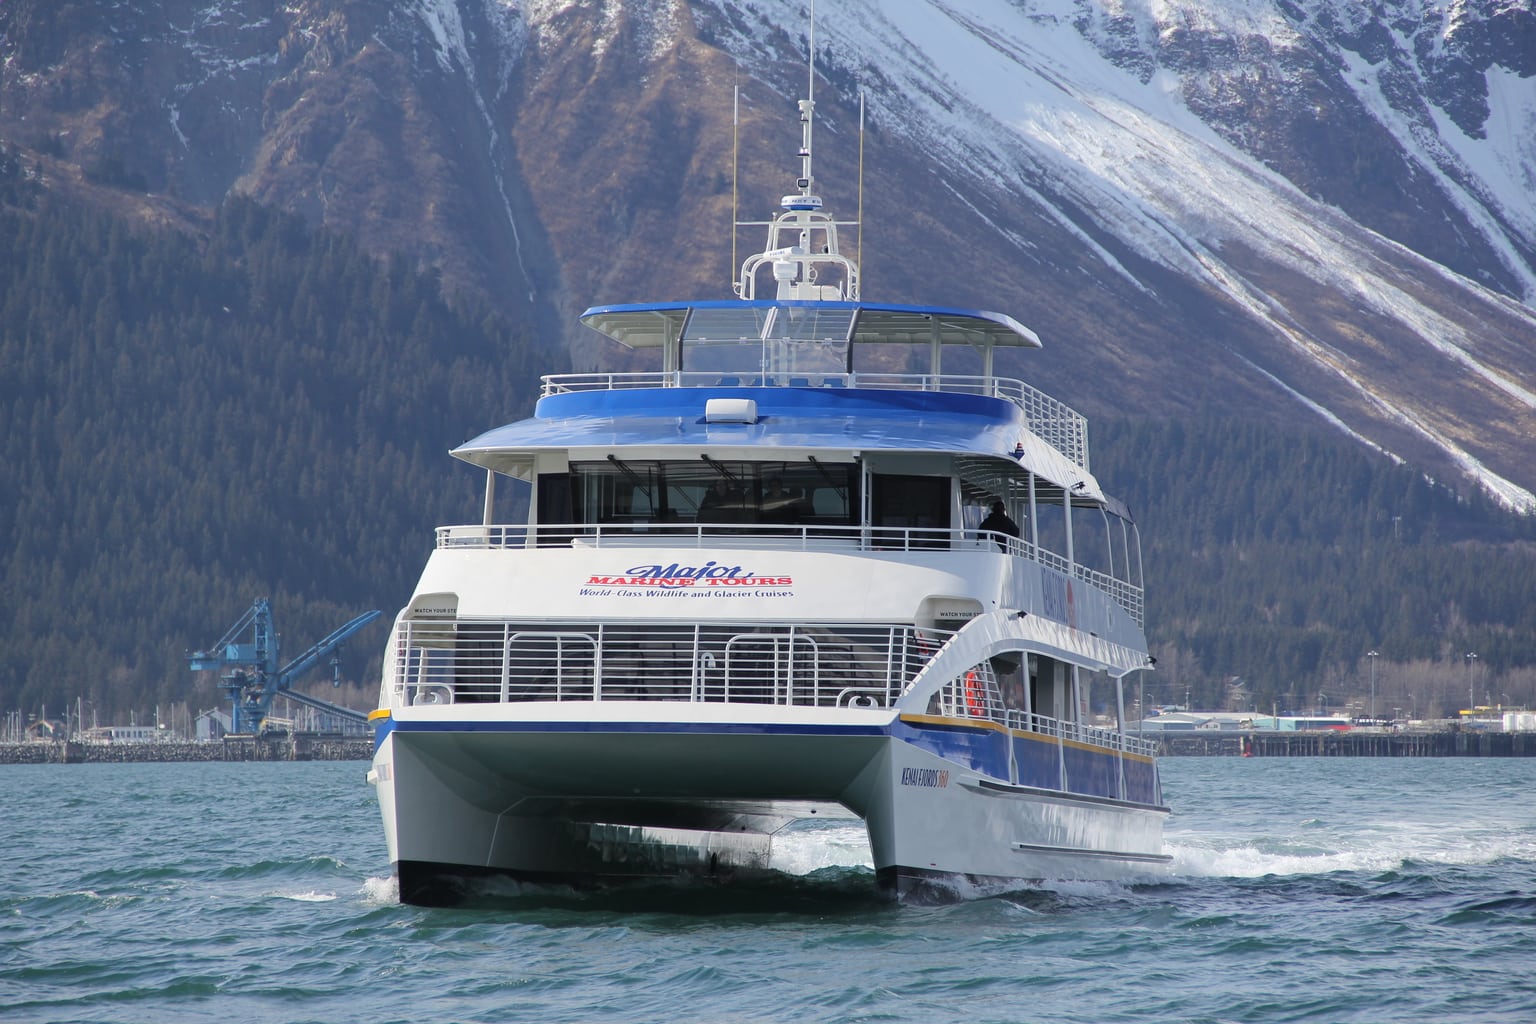 kenai fjords park cruise